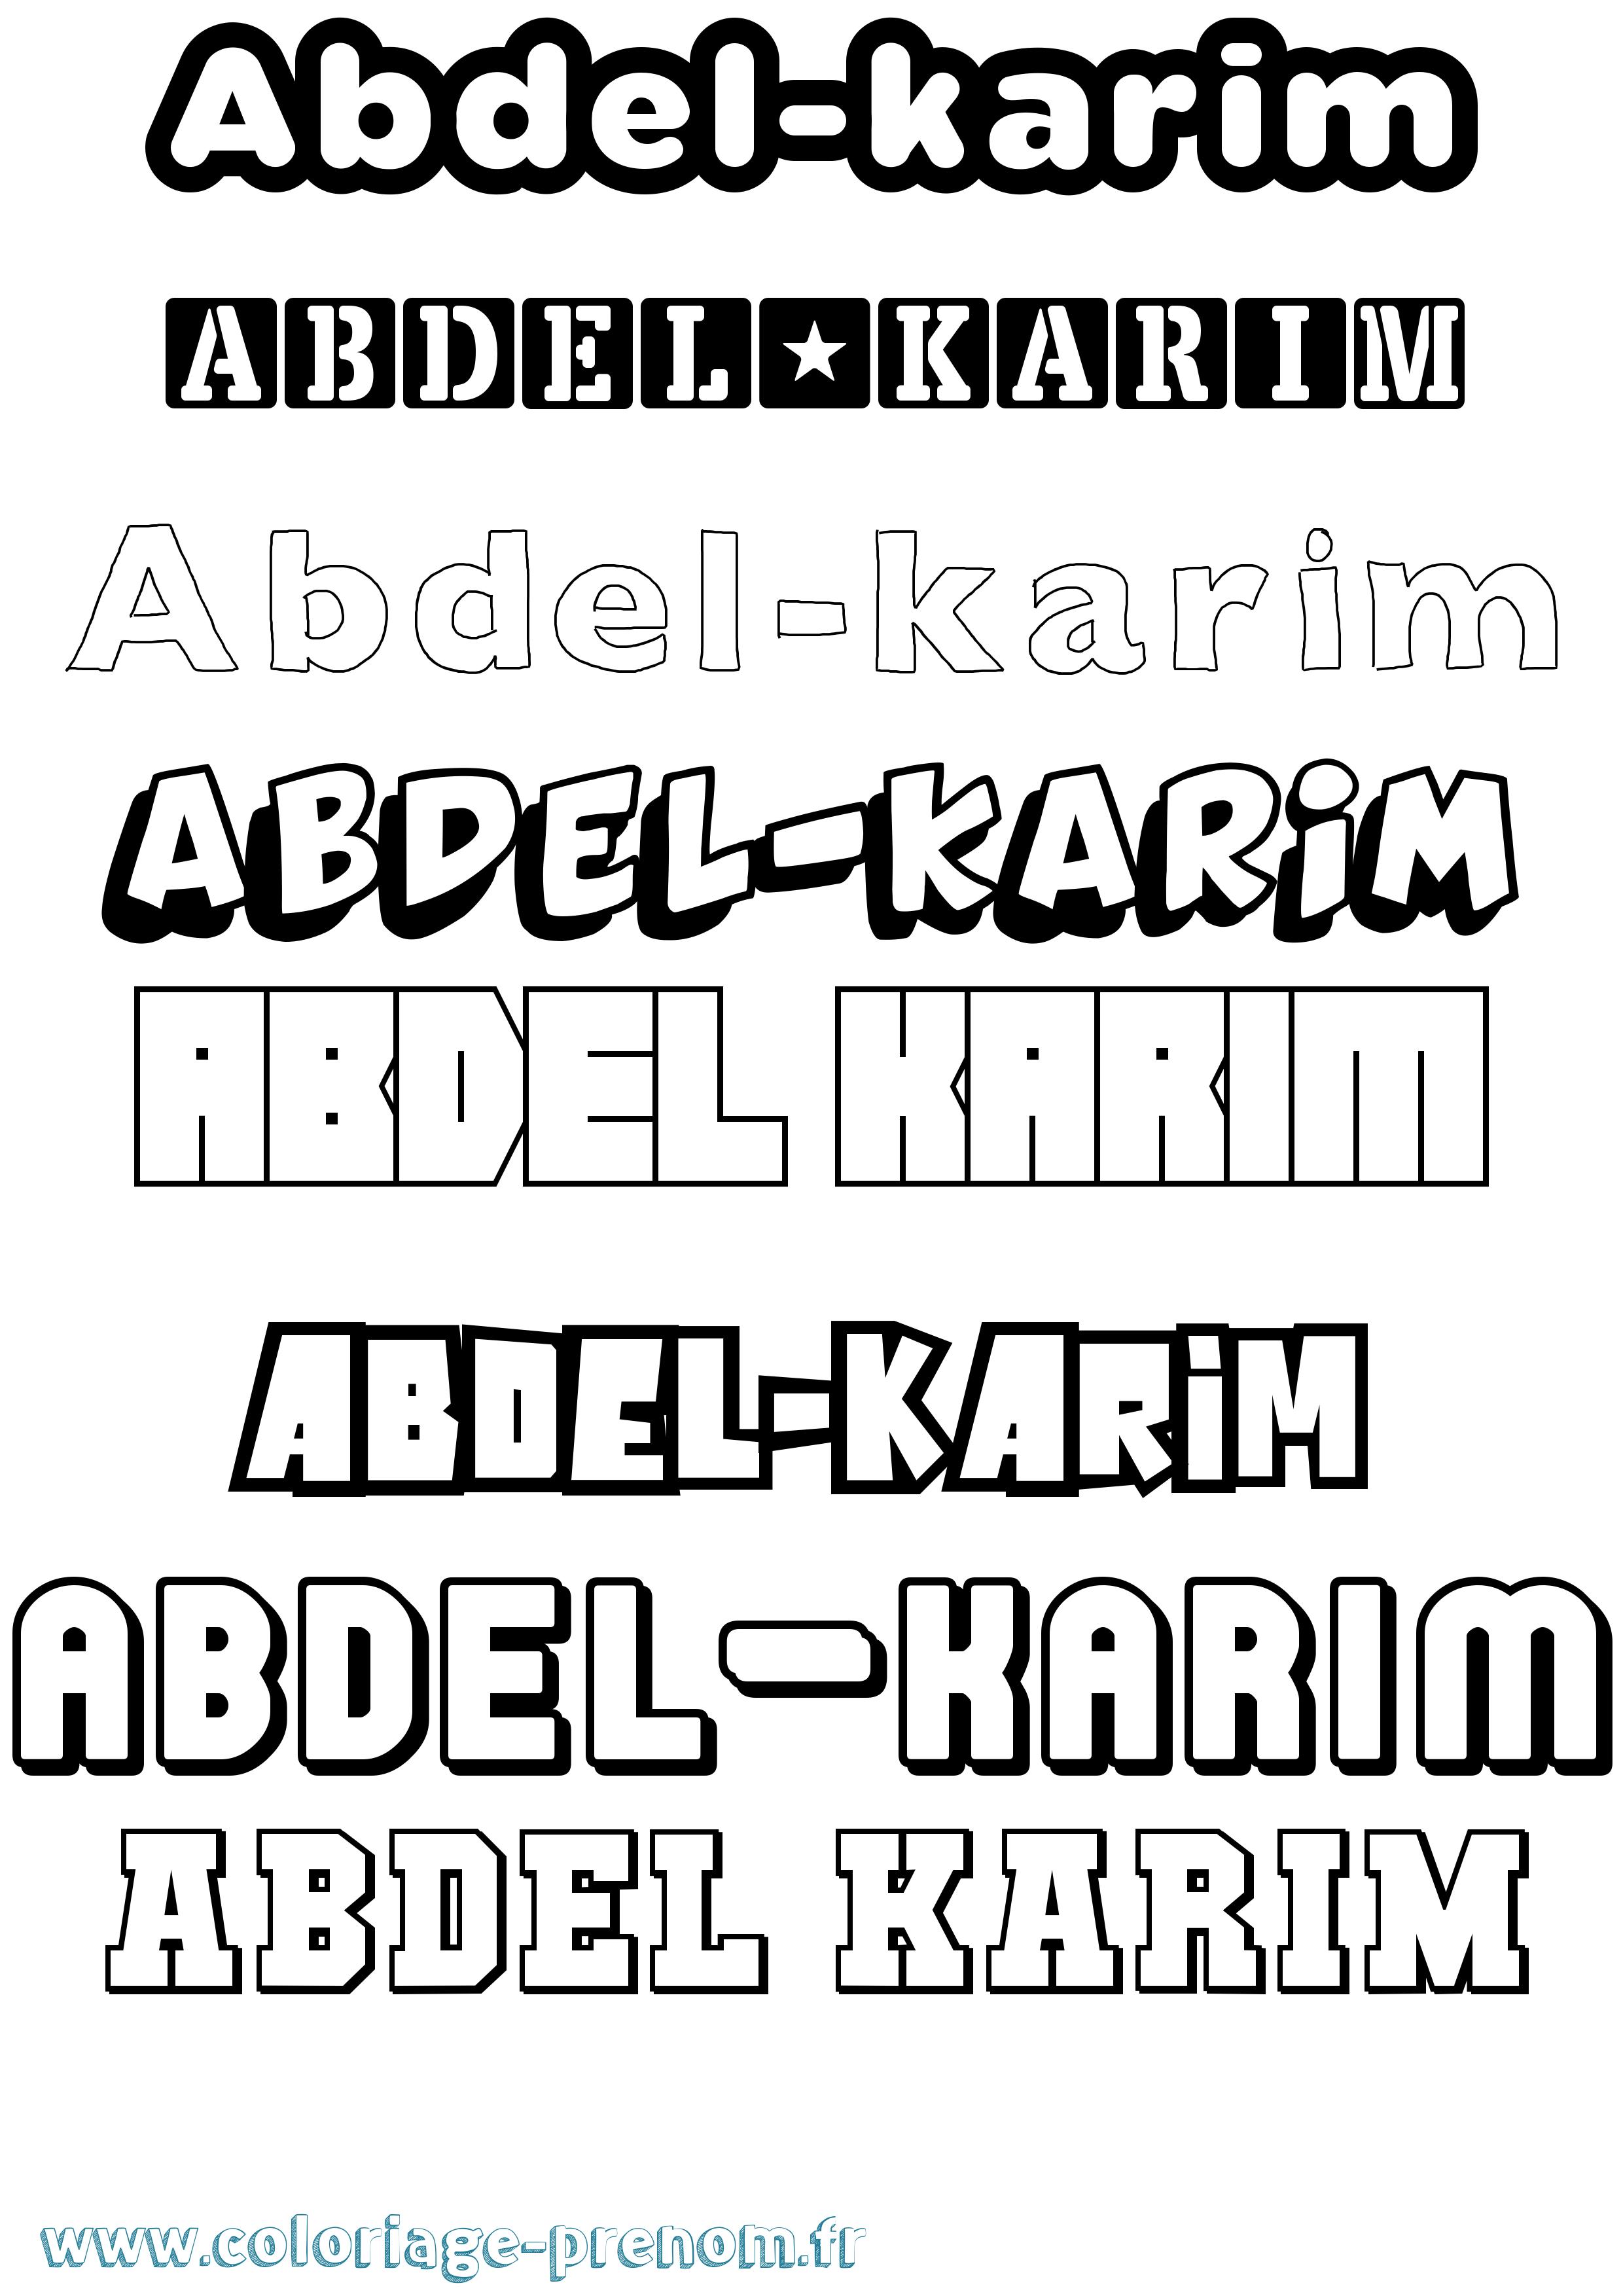 Coloriage prénom Abdel-Karim Simple